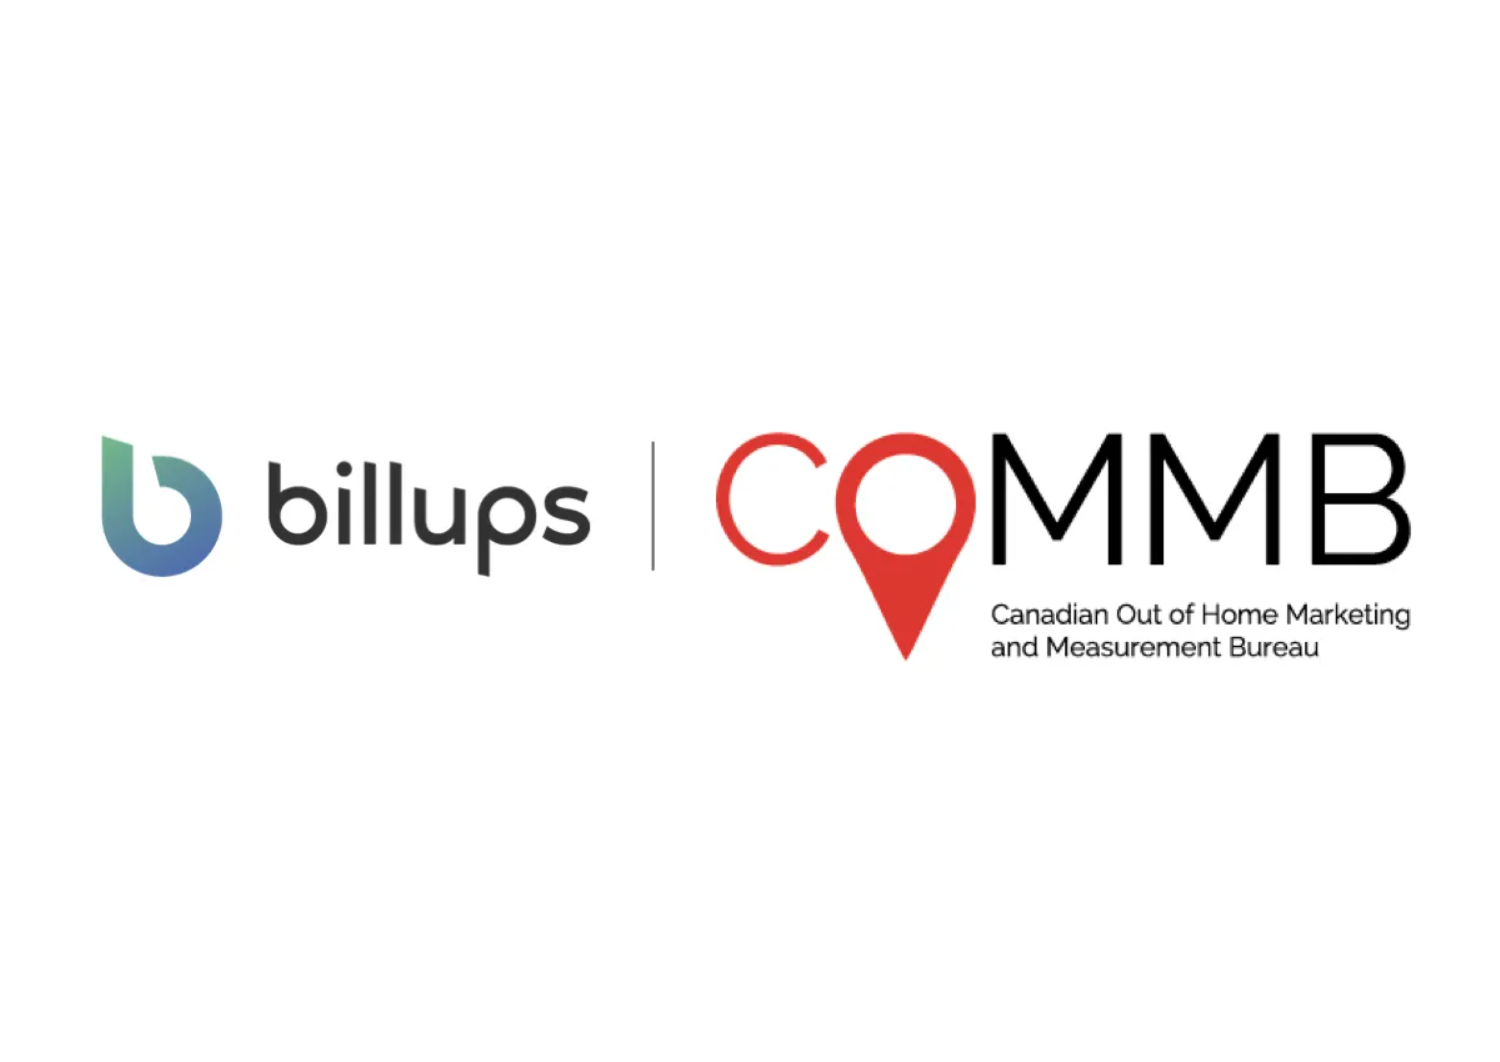 Press Release: Billups Joins COMMB